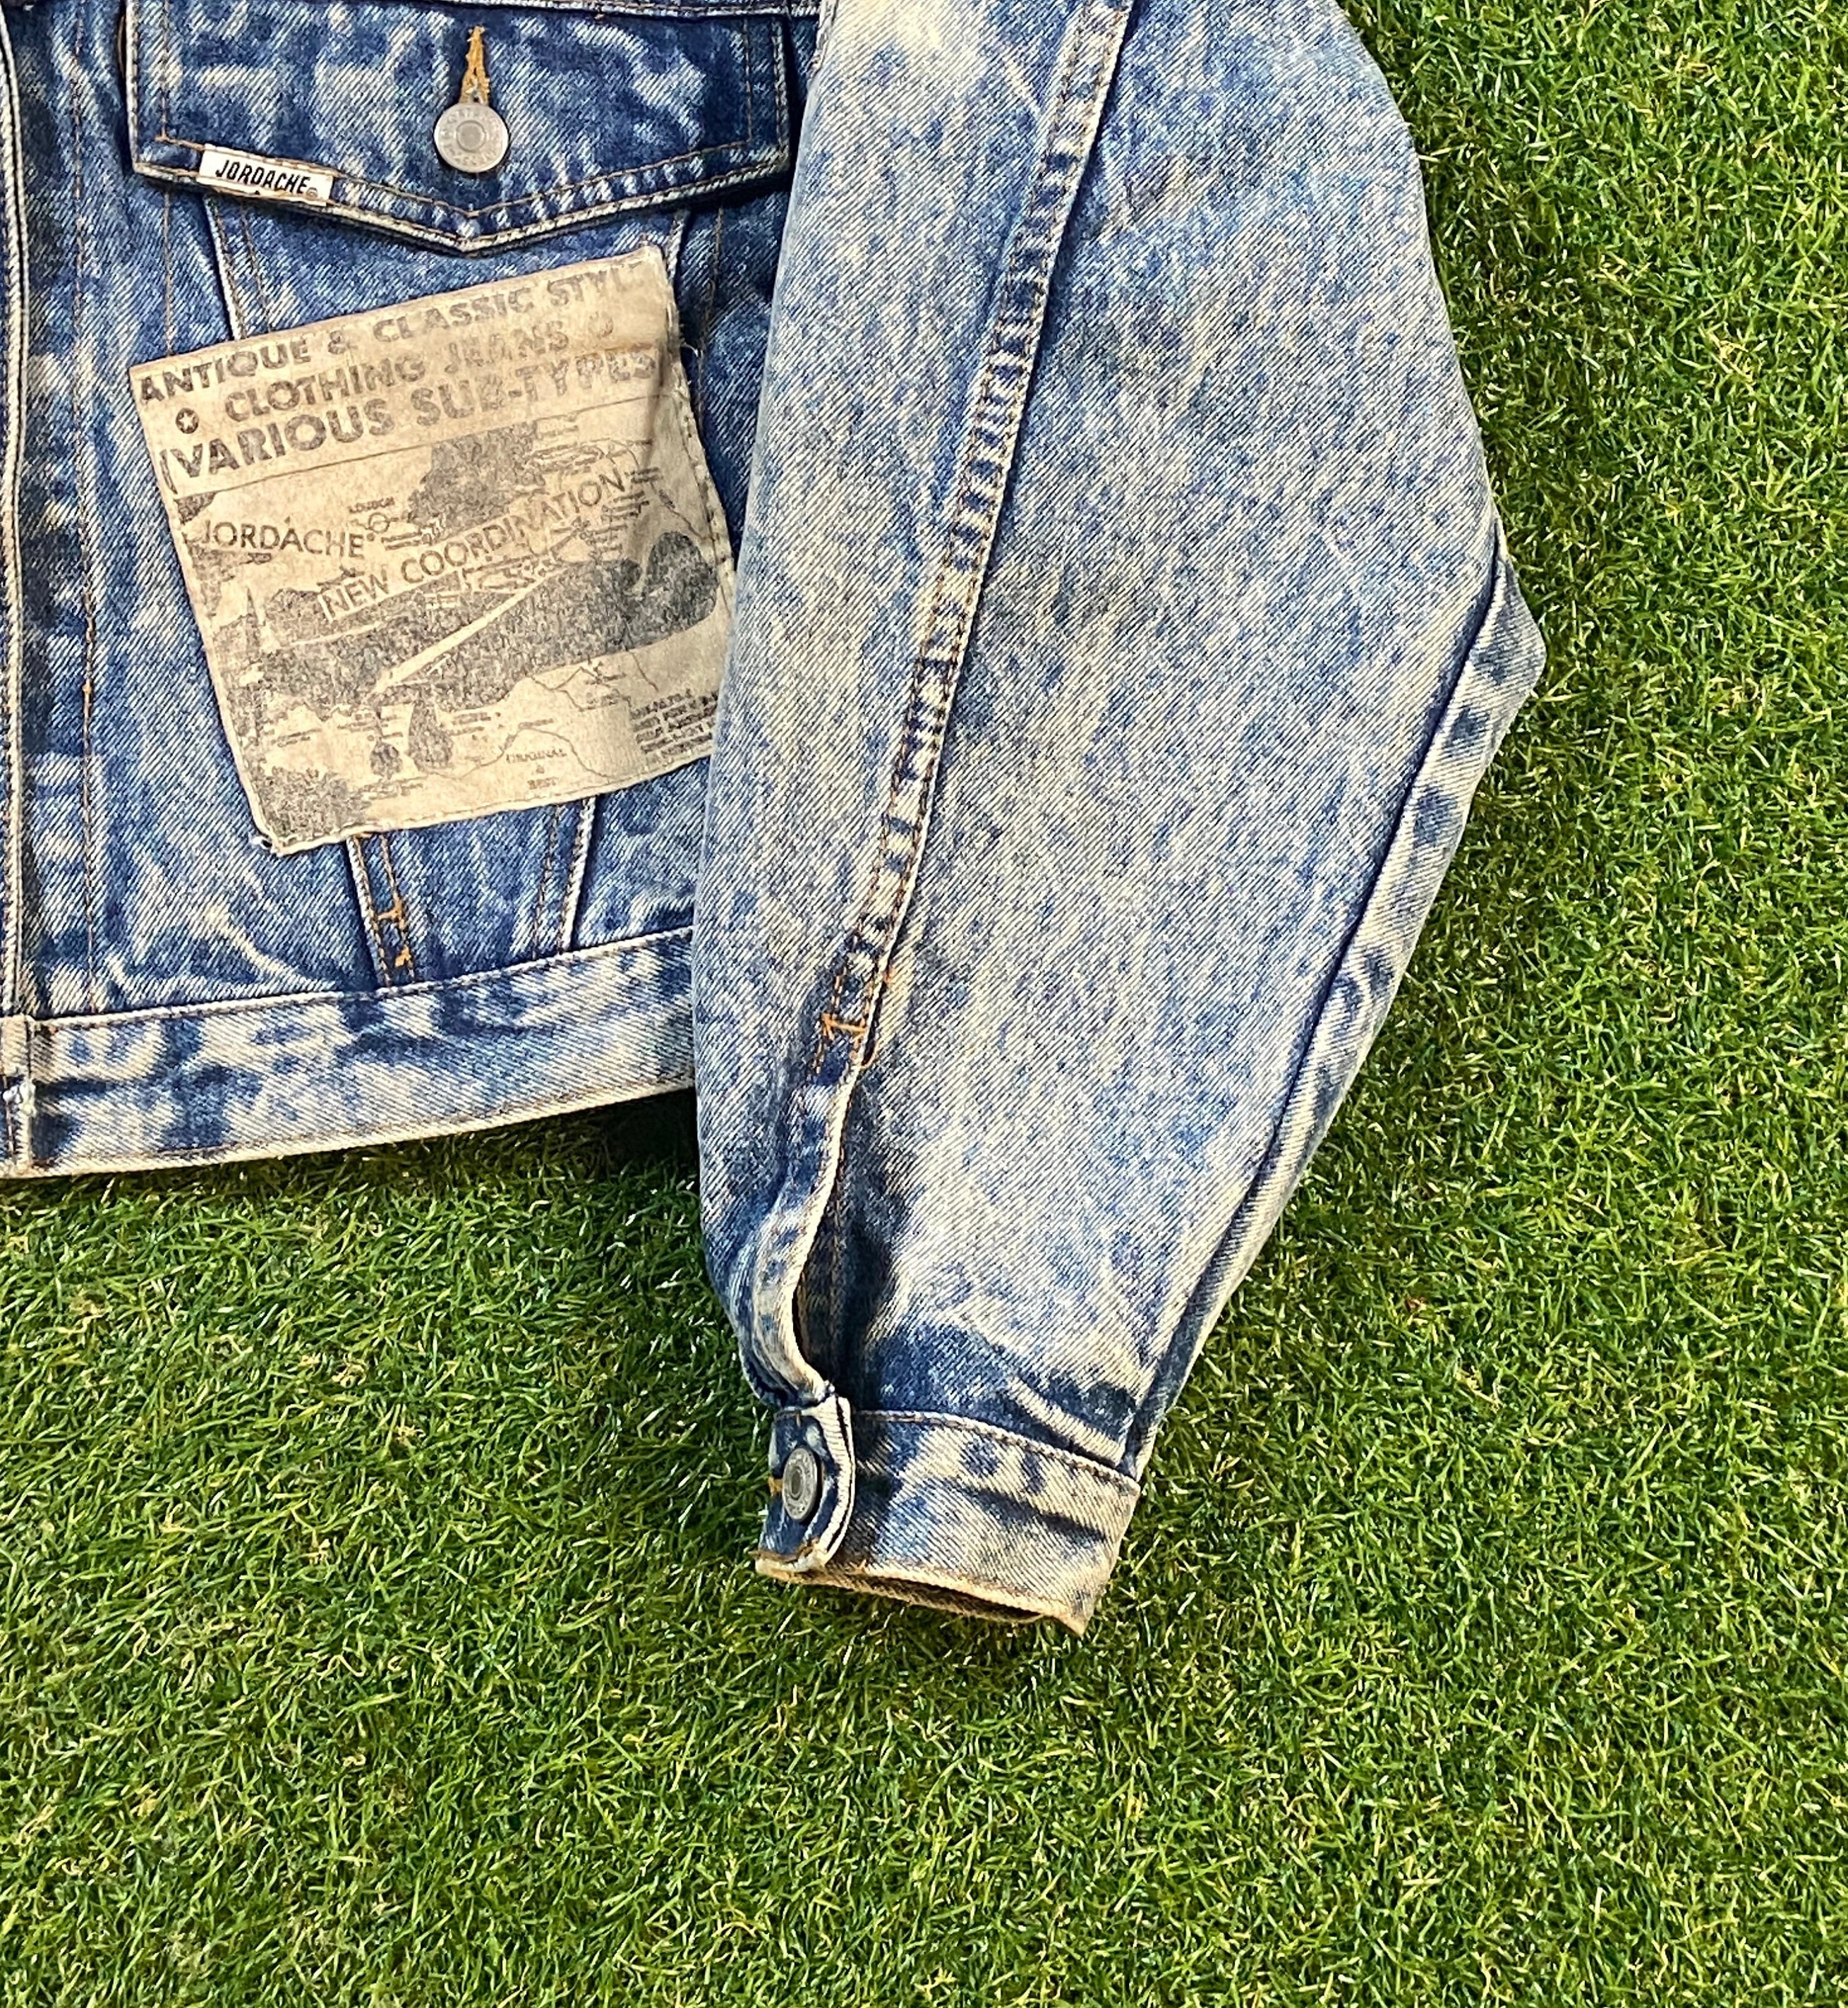 Vintage Jordache Jean Jacket Size Small S American USA Classic 